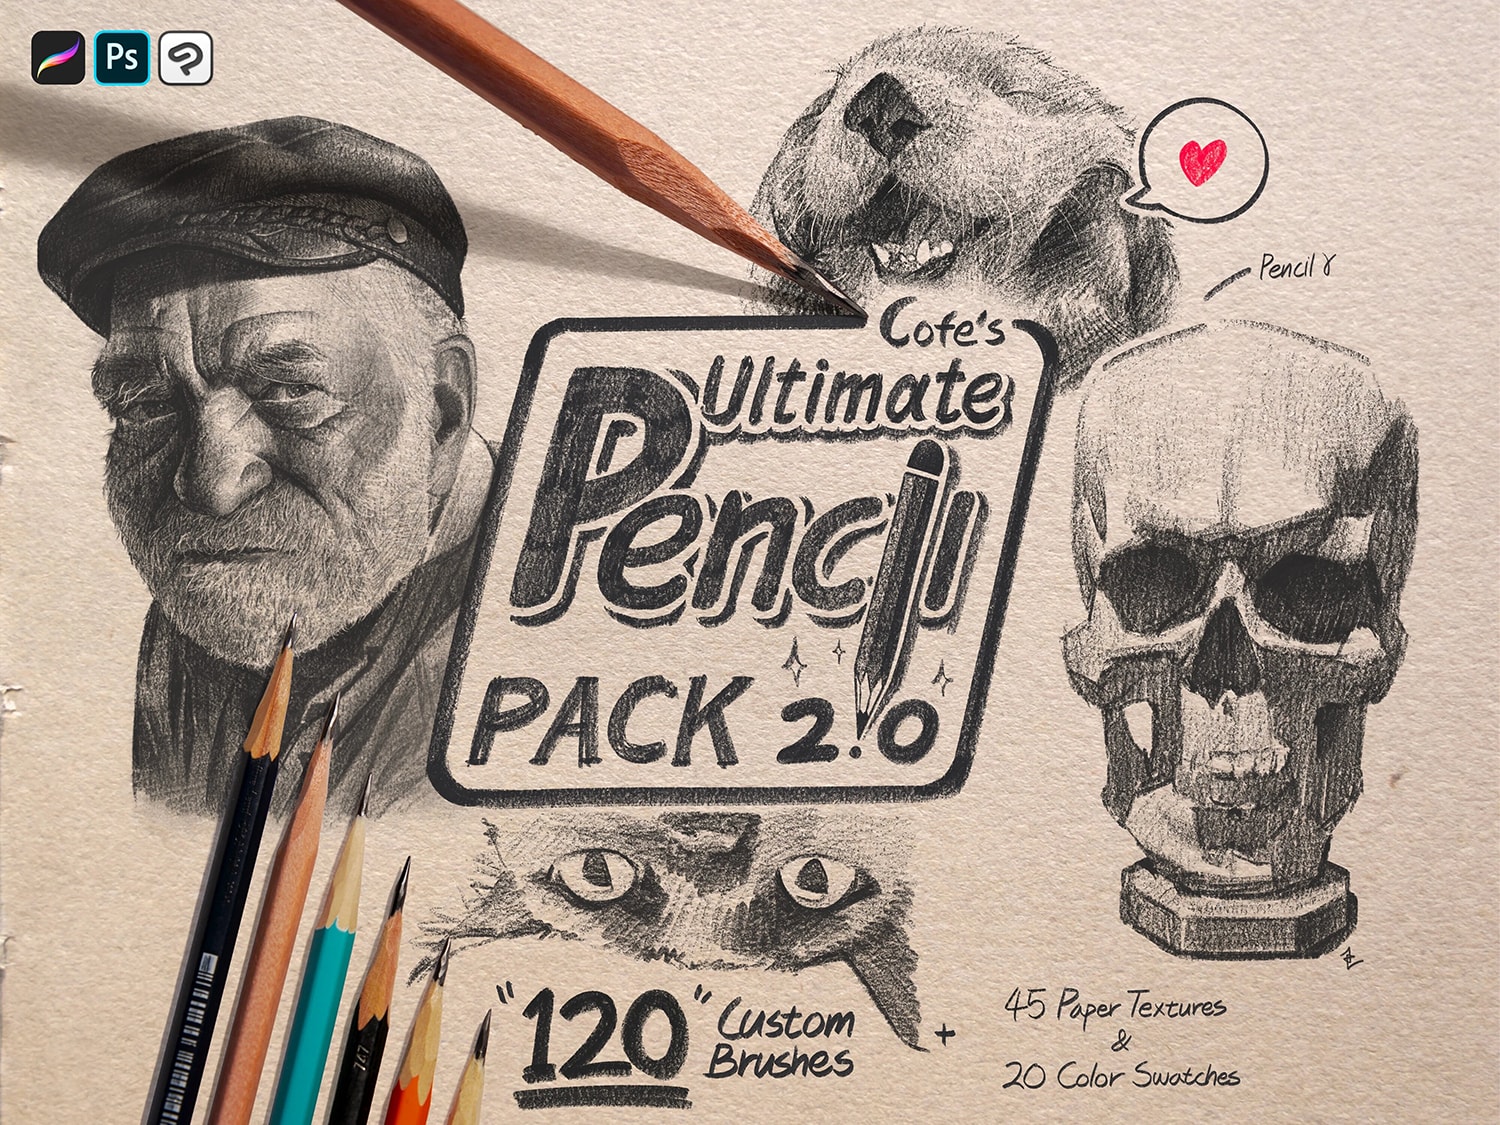 终极铅笔效果iPad笔刷 COFE’s Ultimate Pencil Pack Ver 2.0